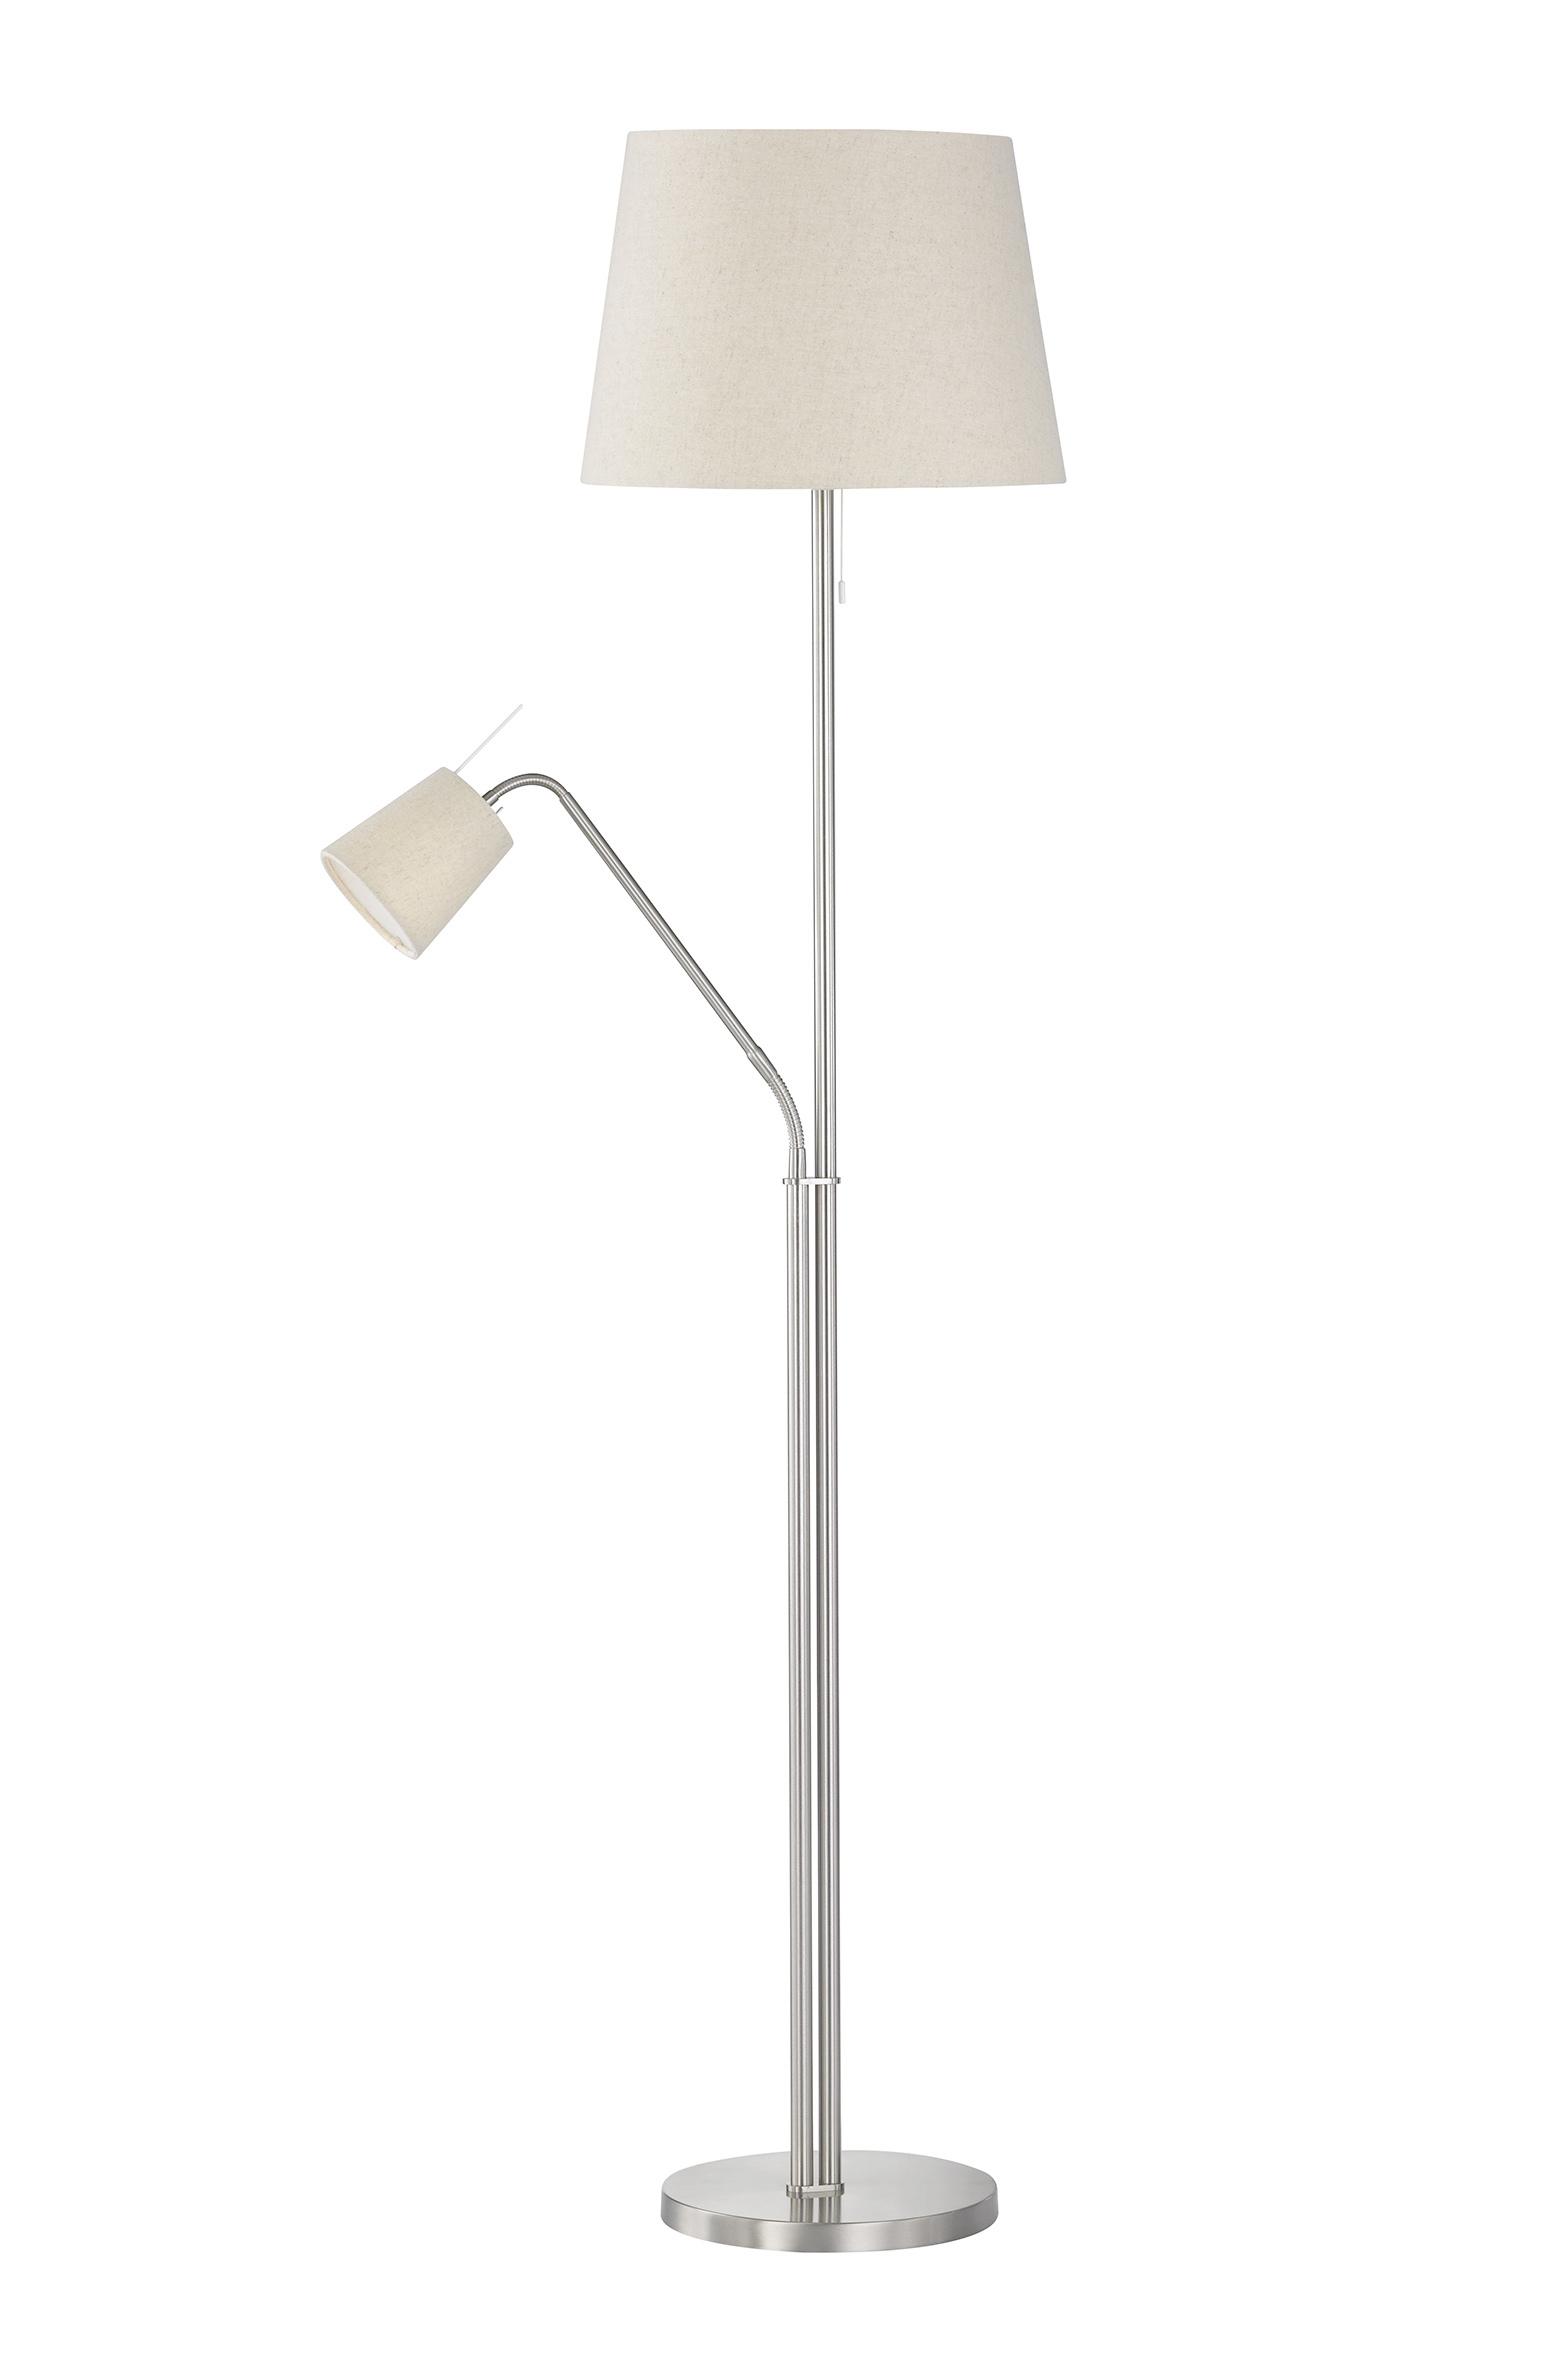 Stehlampe Layer dimmbar Nickelfarben/Sandfarben - Sandfarben/Nickelfarben, Design, Textil/Metall (40/175cm) - Fischer & Honsel